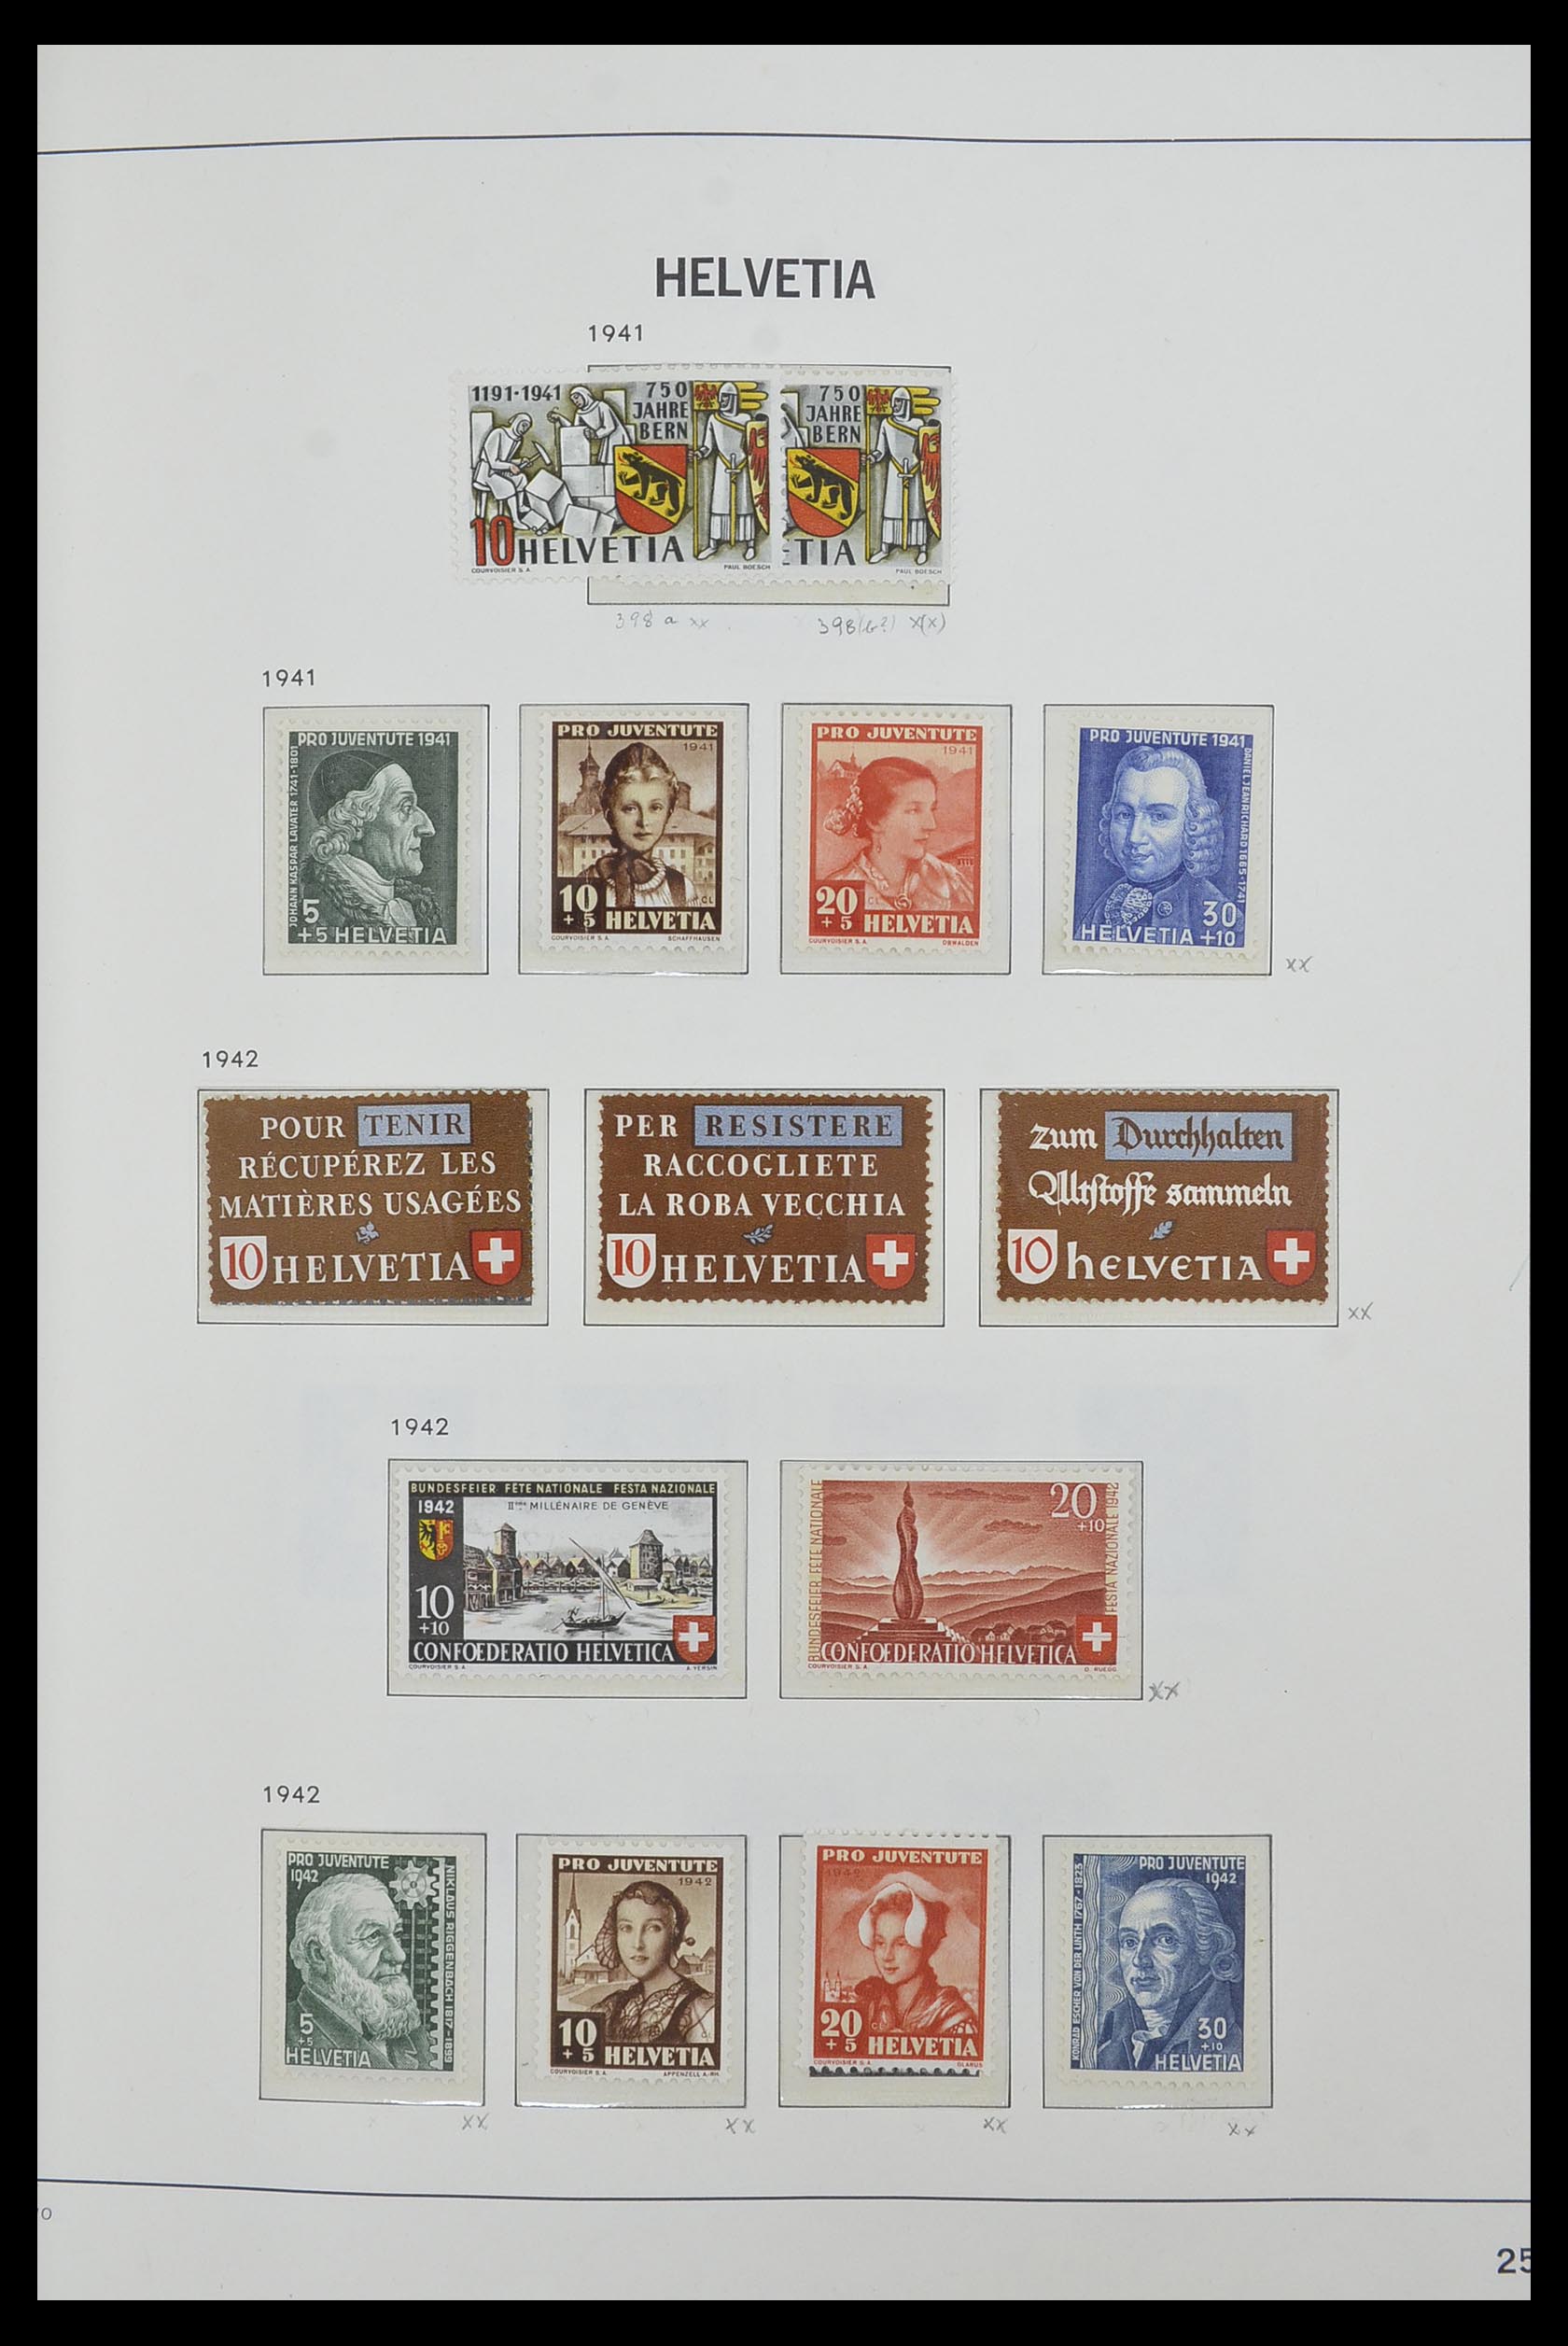 33556 025 - Stamp collection 33556 Switzerland 1862-2000.